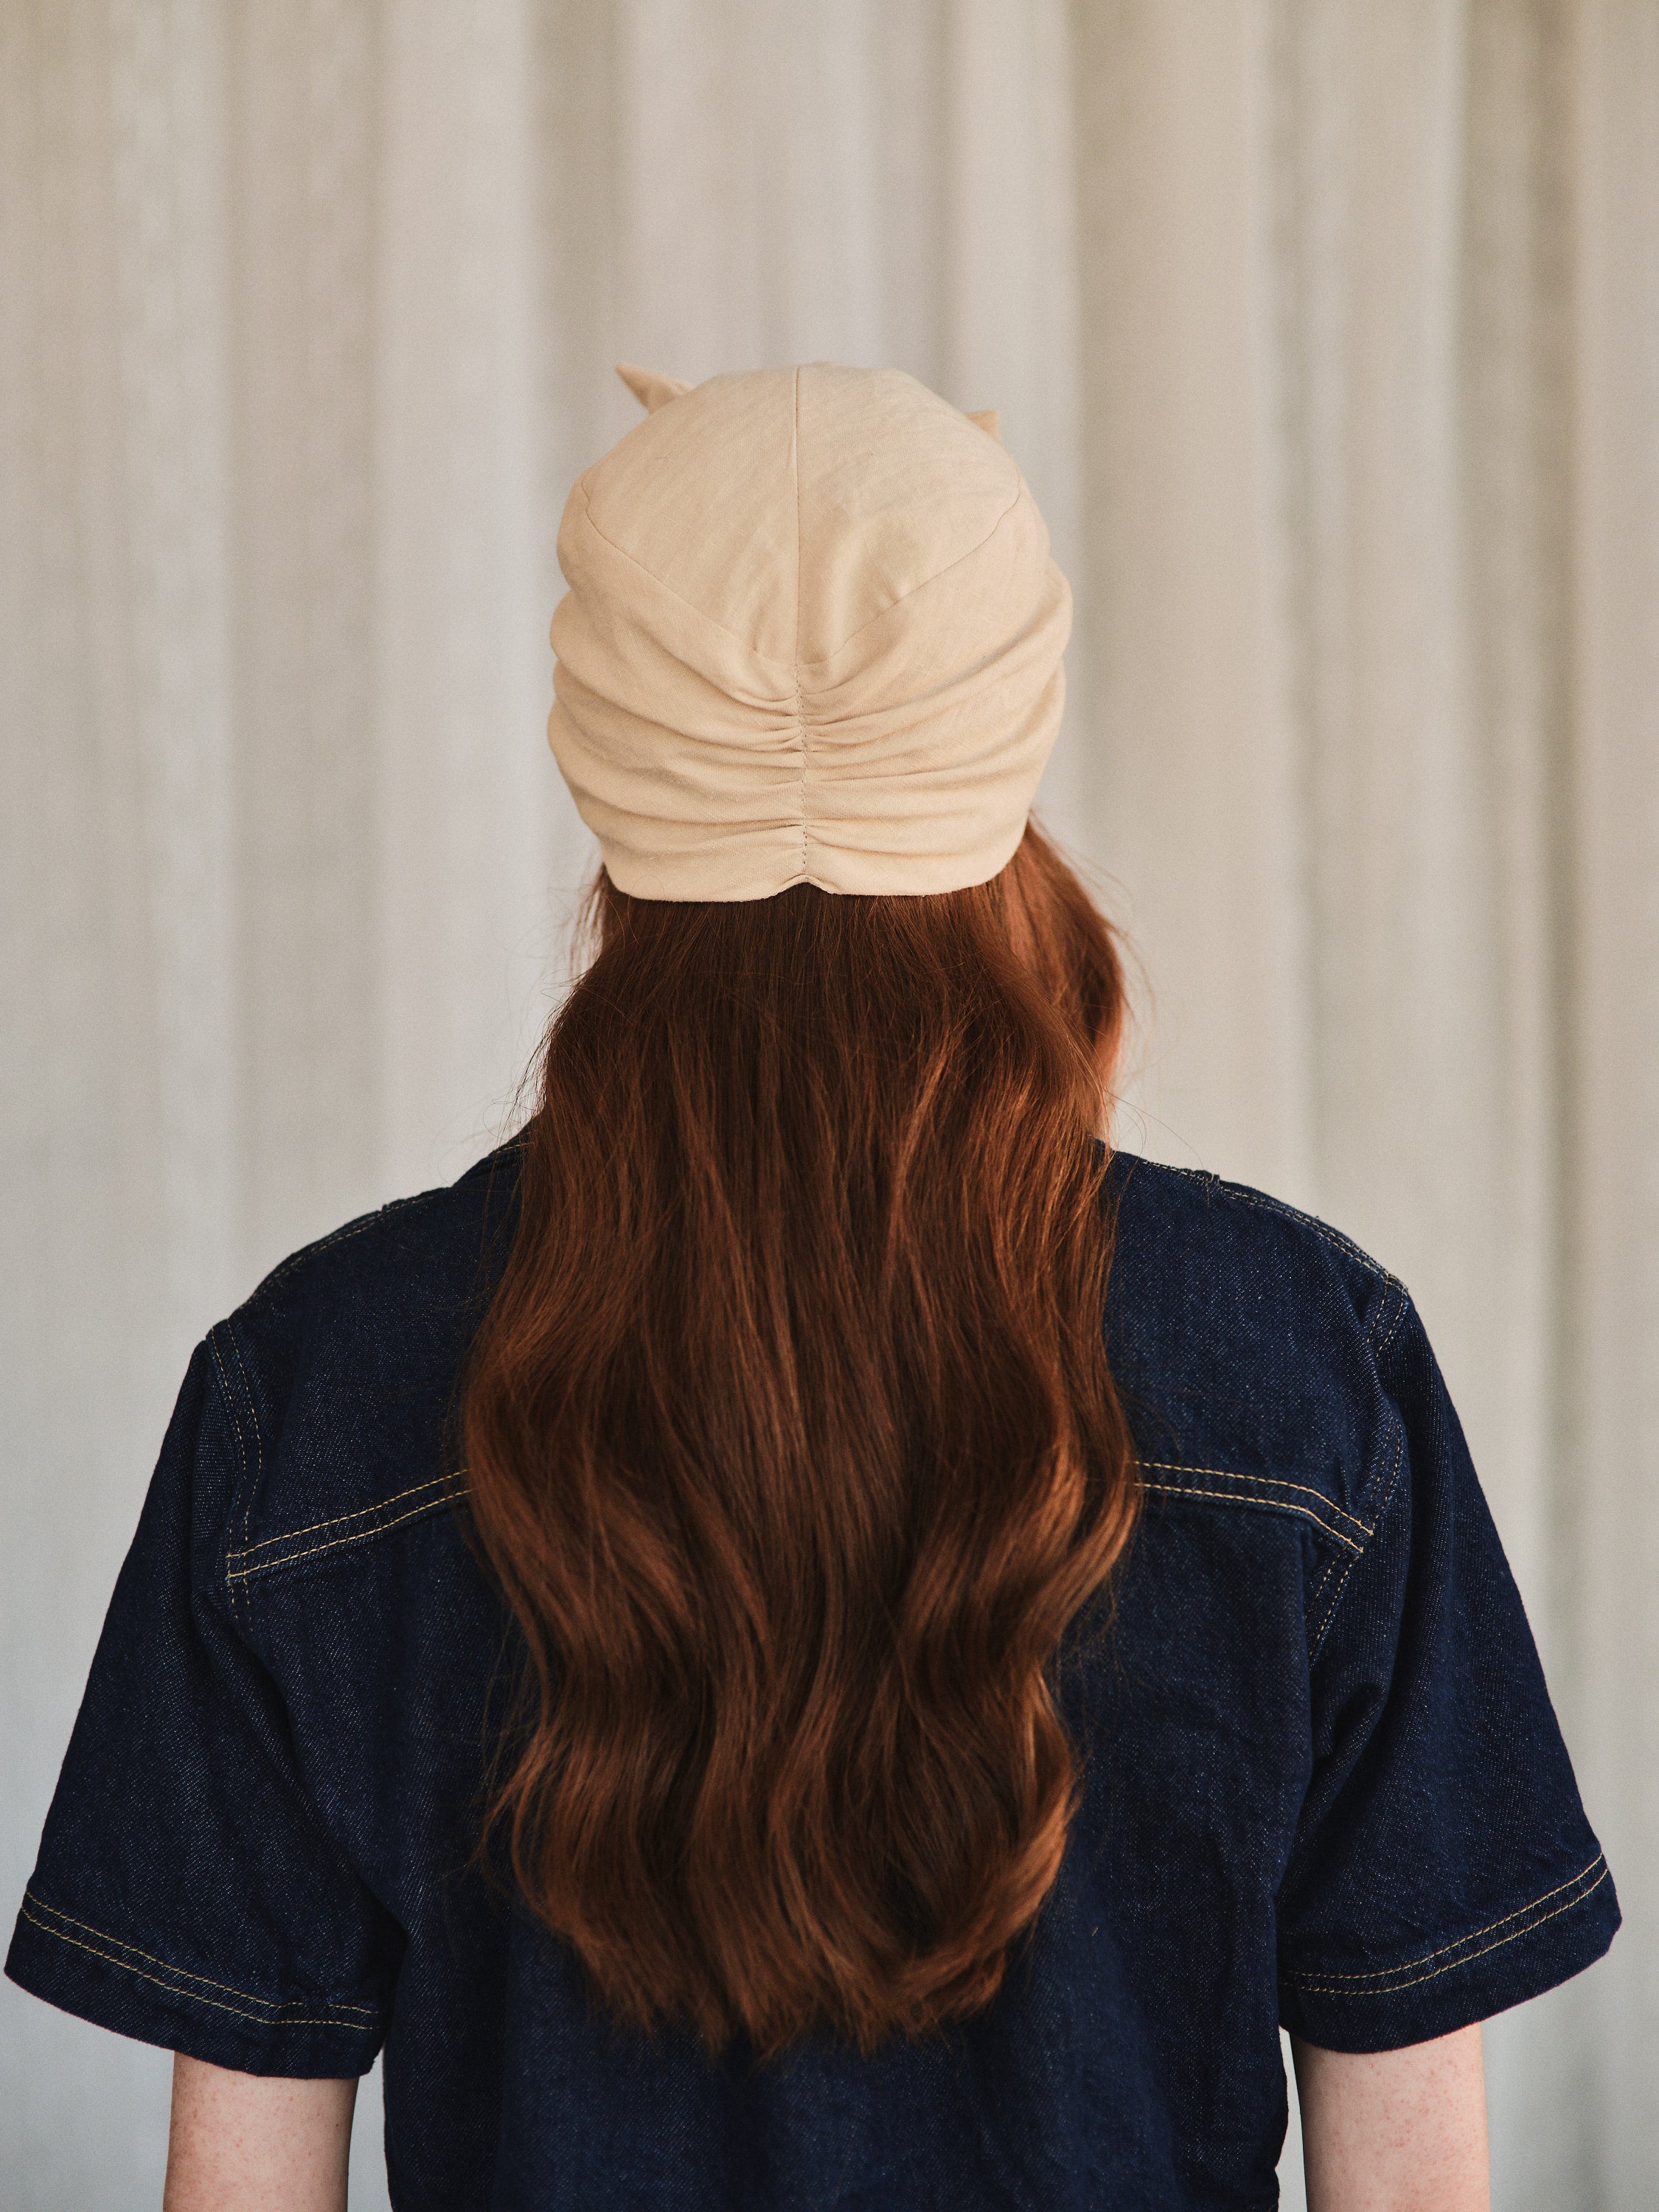 Parelli knotted turban hat - Cream linen